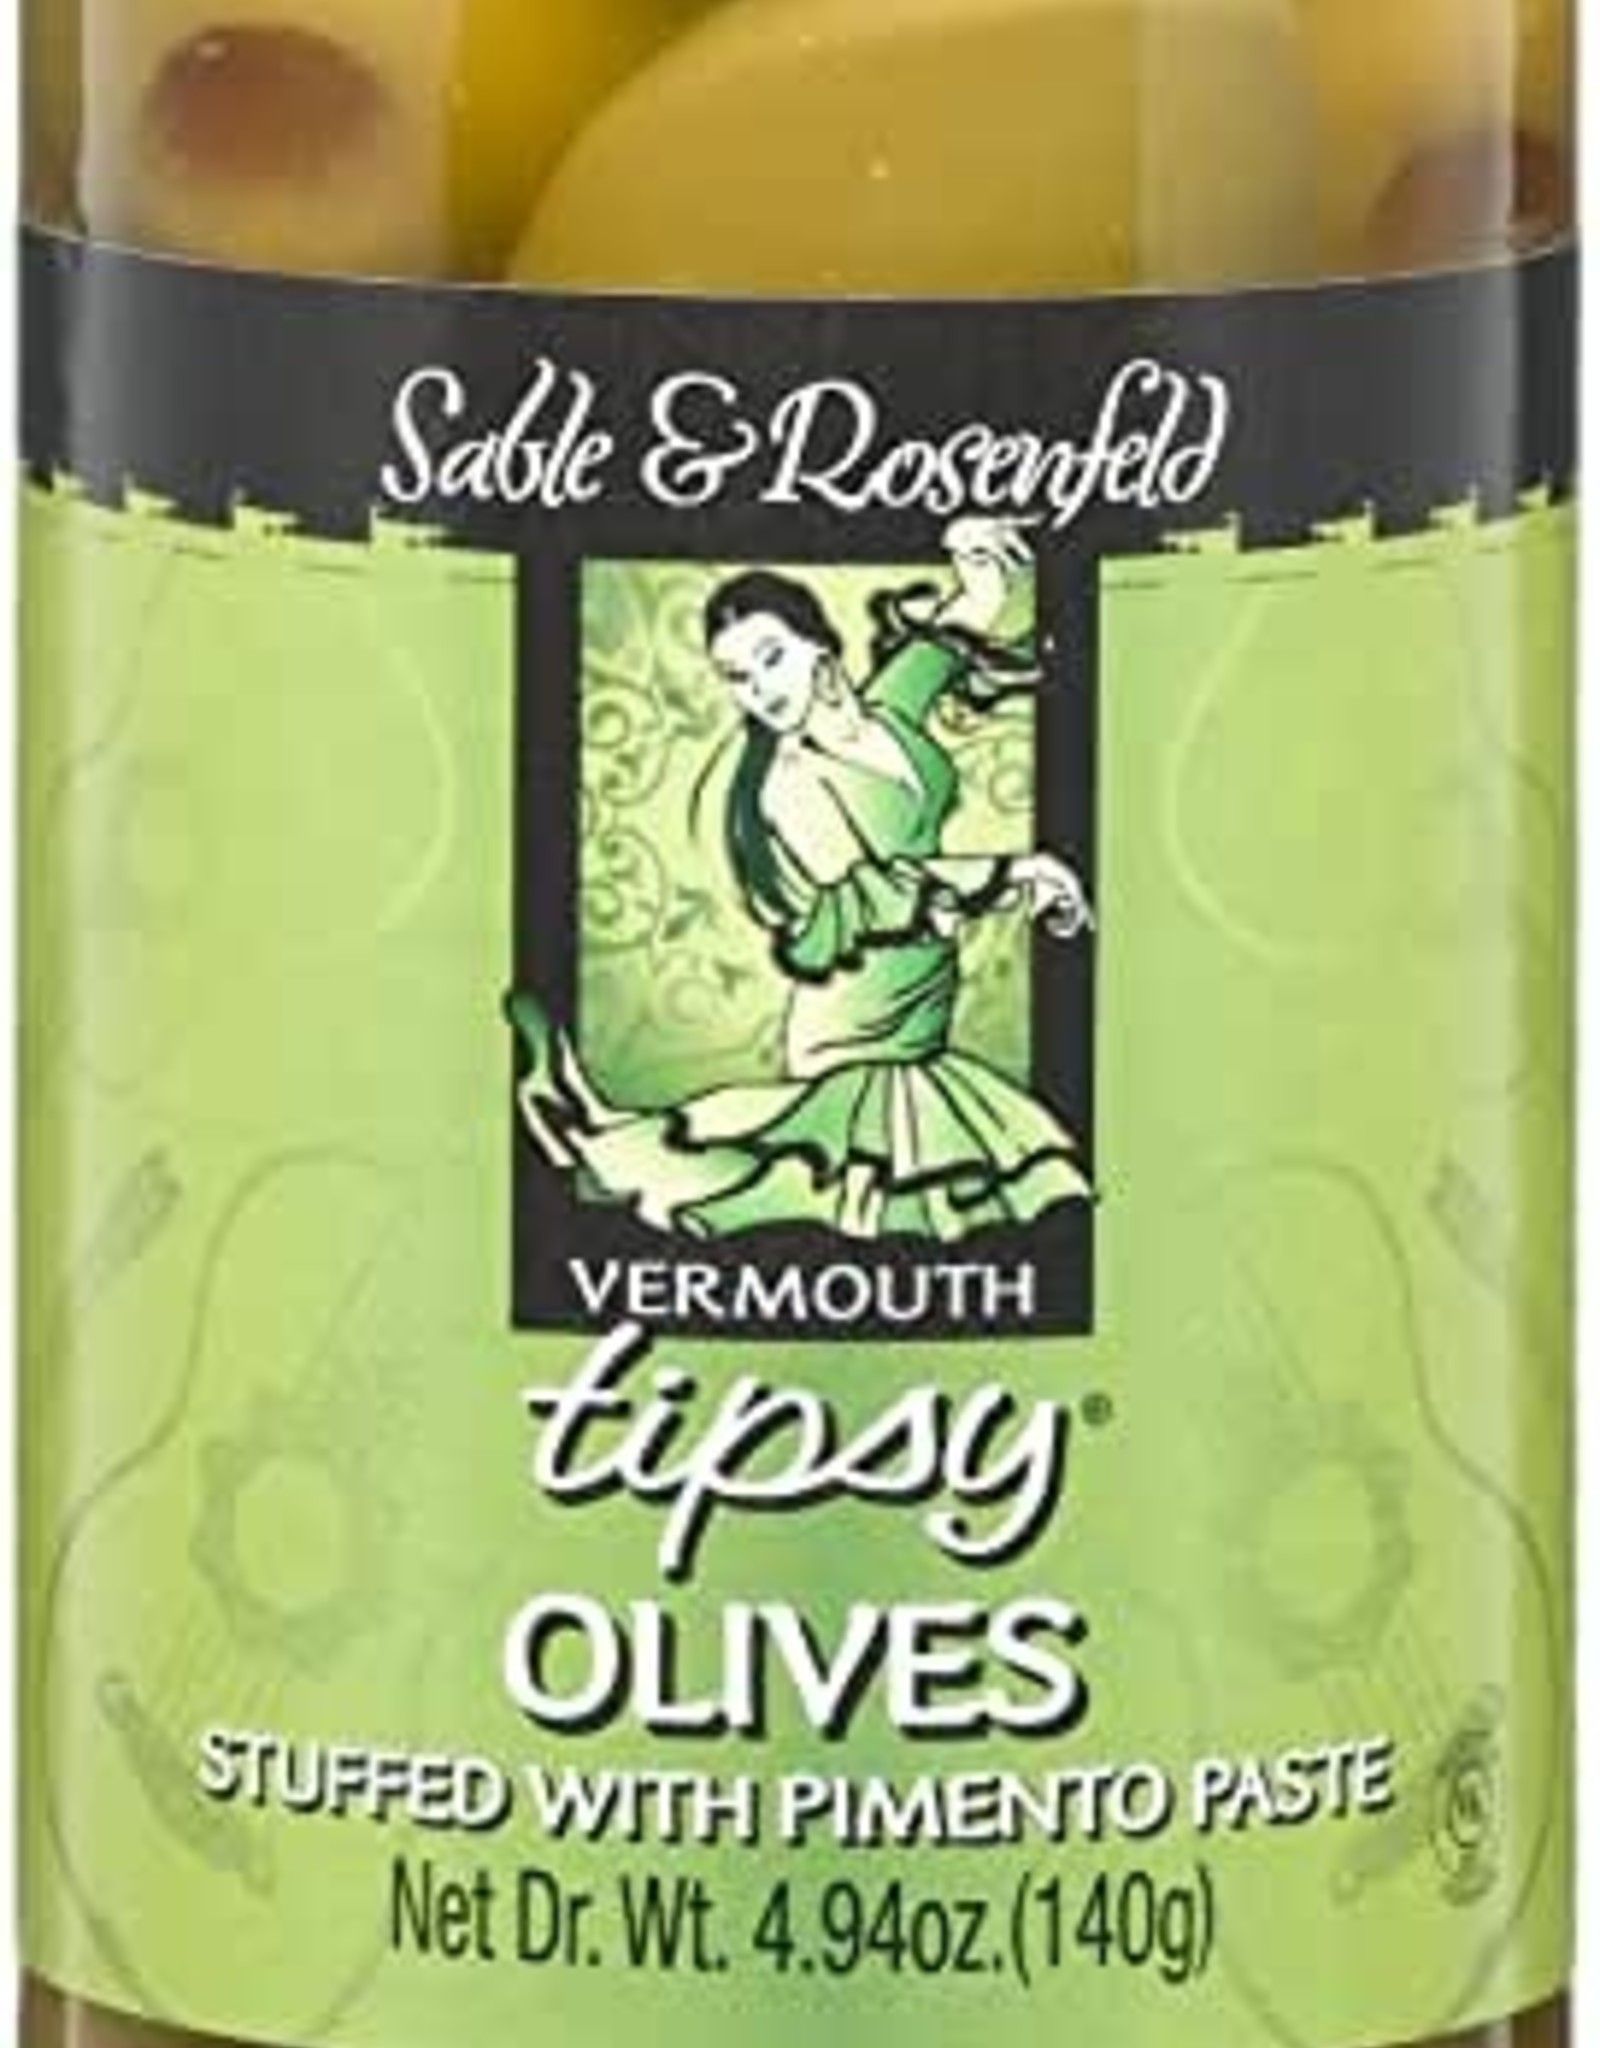 Sable & Rosenfeld Vermouth Tipsy Pimento Olives 5 oz